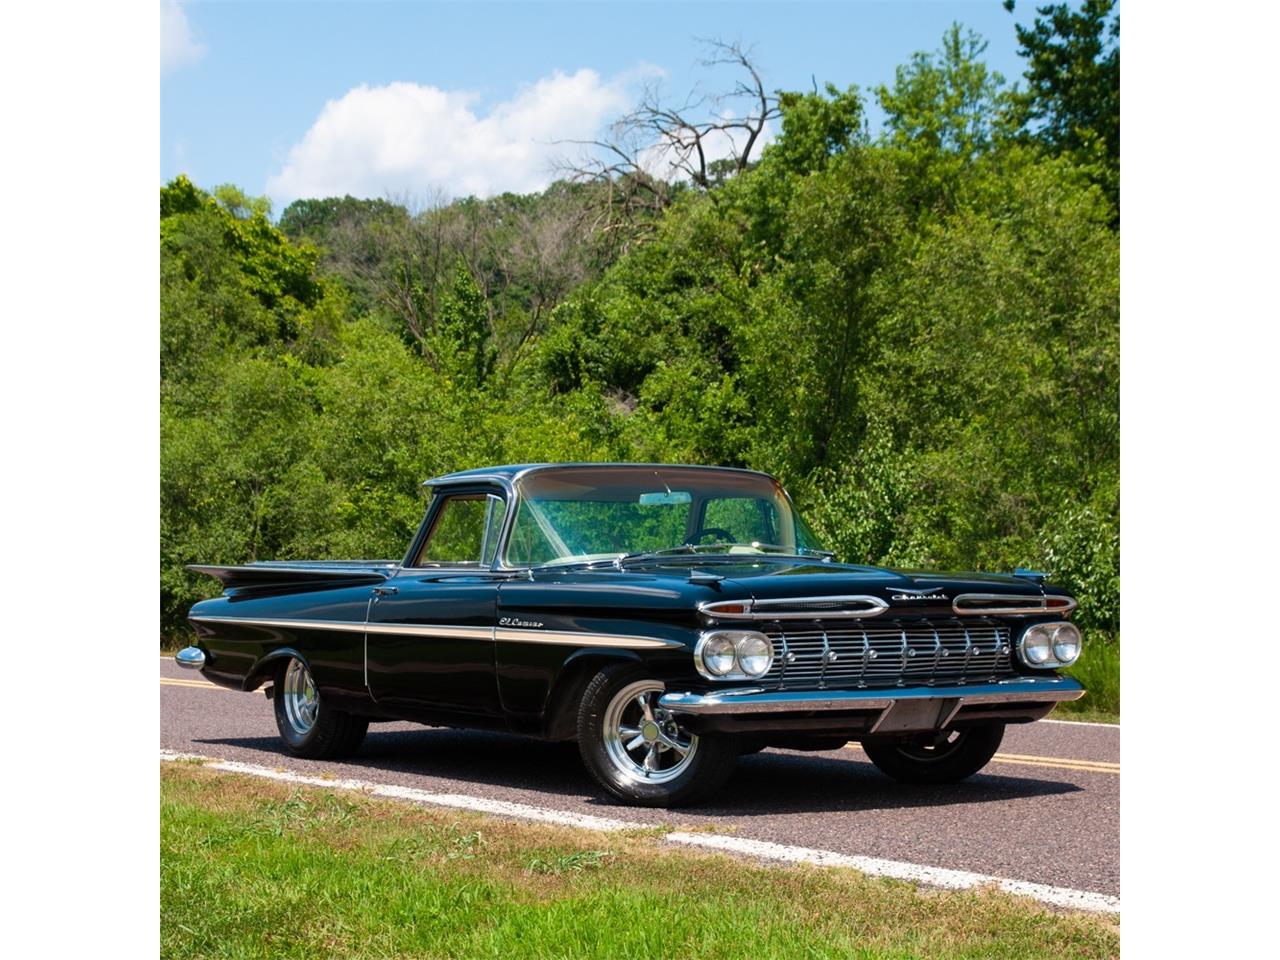 Black 1959 Chevrolet El Camino for sale located in St. Louis, Missouri - $3...